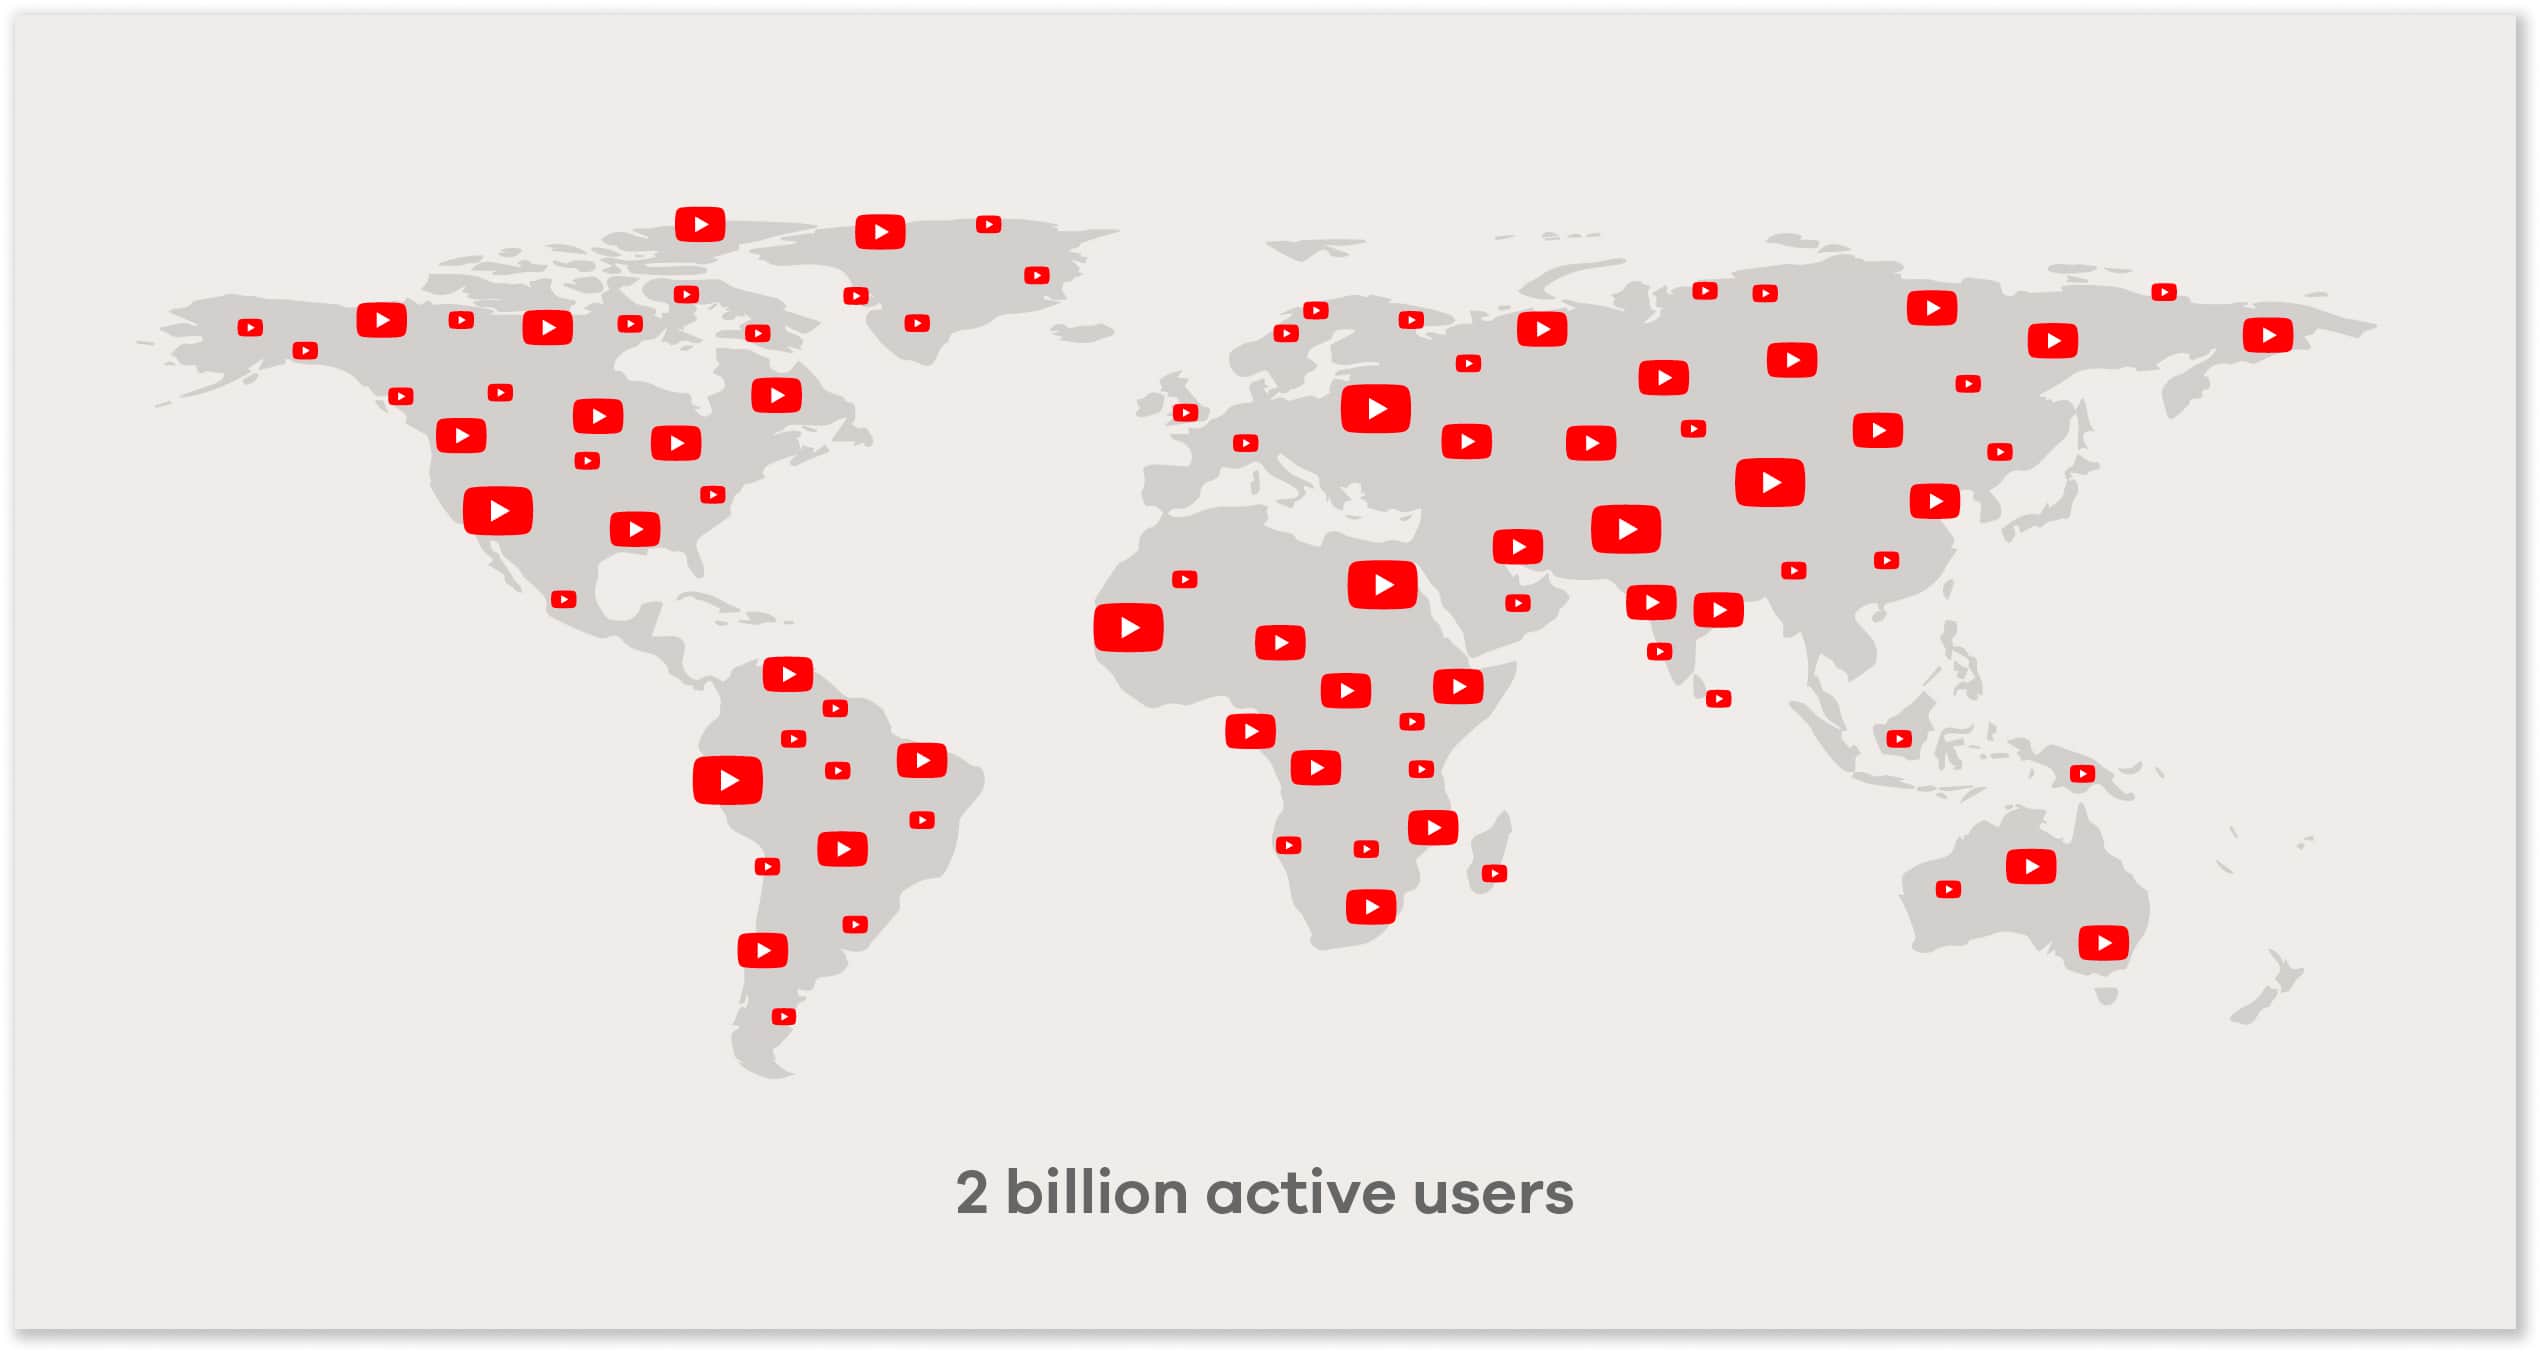 YouTube has 2 billion active users